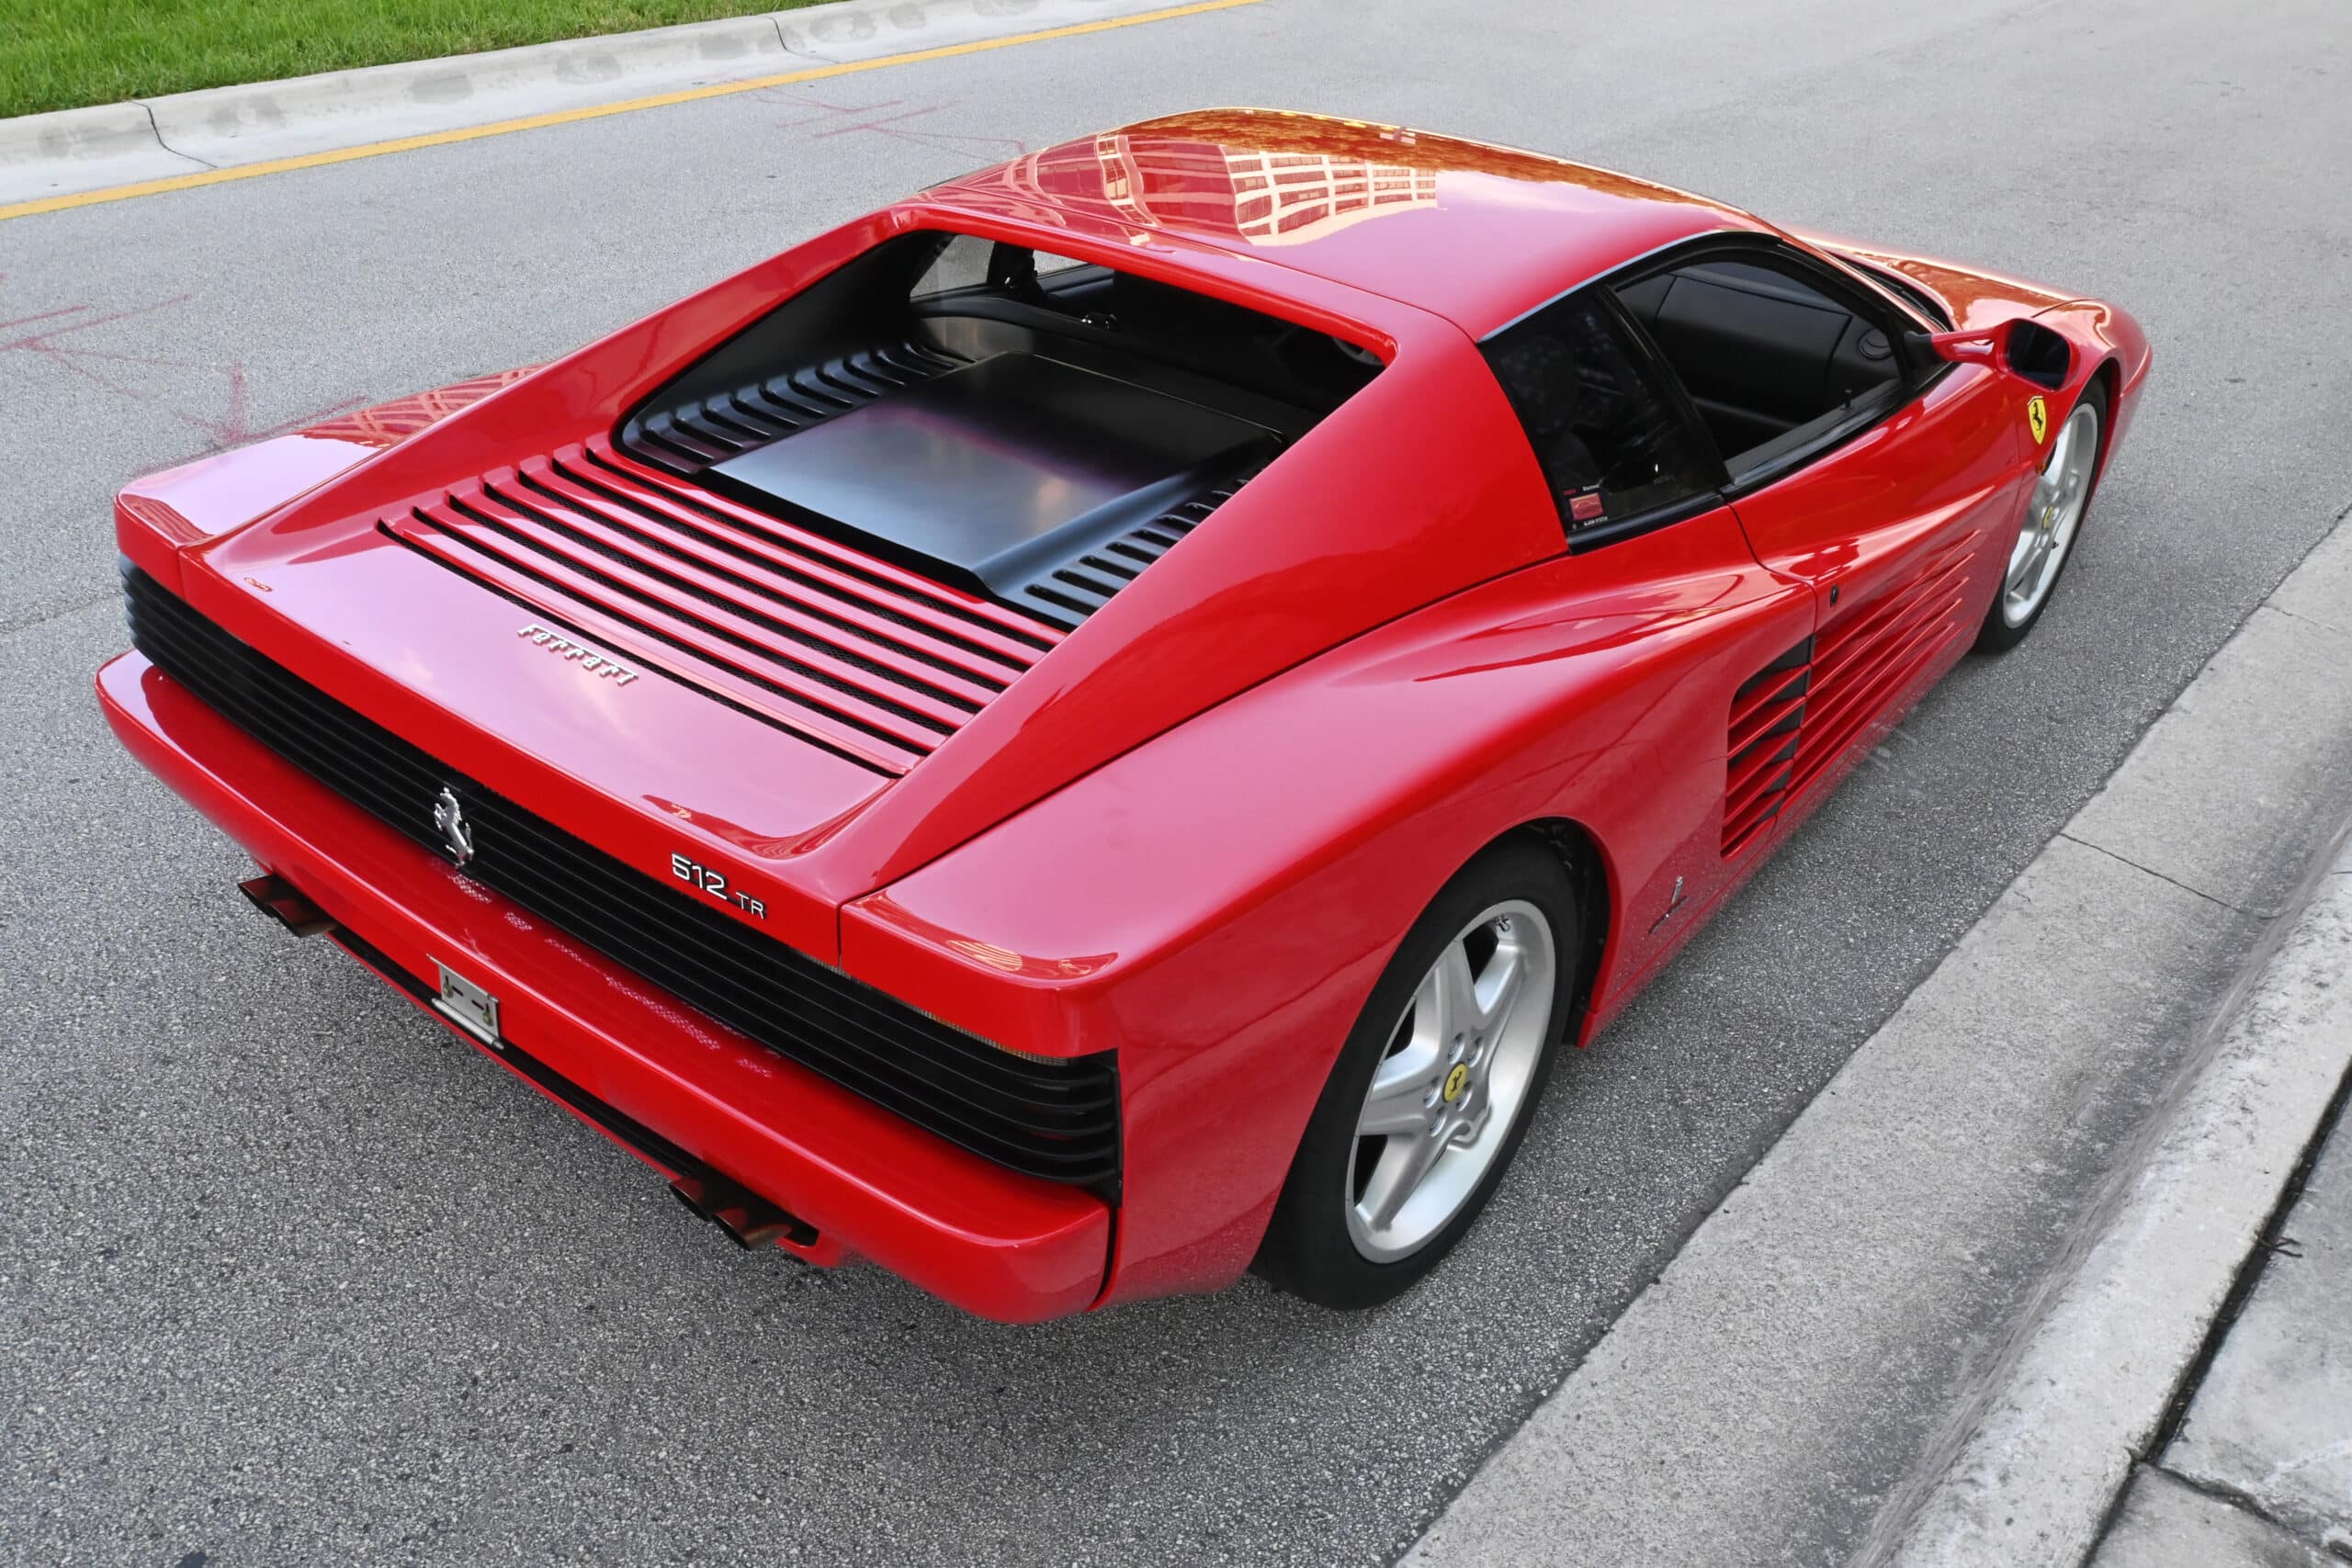 1993 Ferrari 512TR, 18K MILES, BELT SERVICE IN APRIL OF 2021, DOCUMENTED HISTORY, SWISS MARKET CAR|1993 Ferrari Testarossa 512 TR